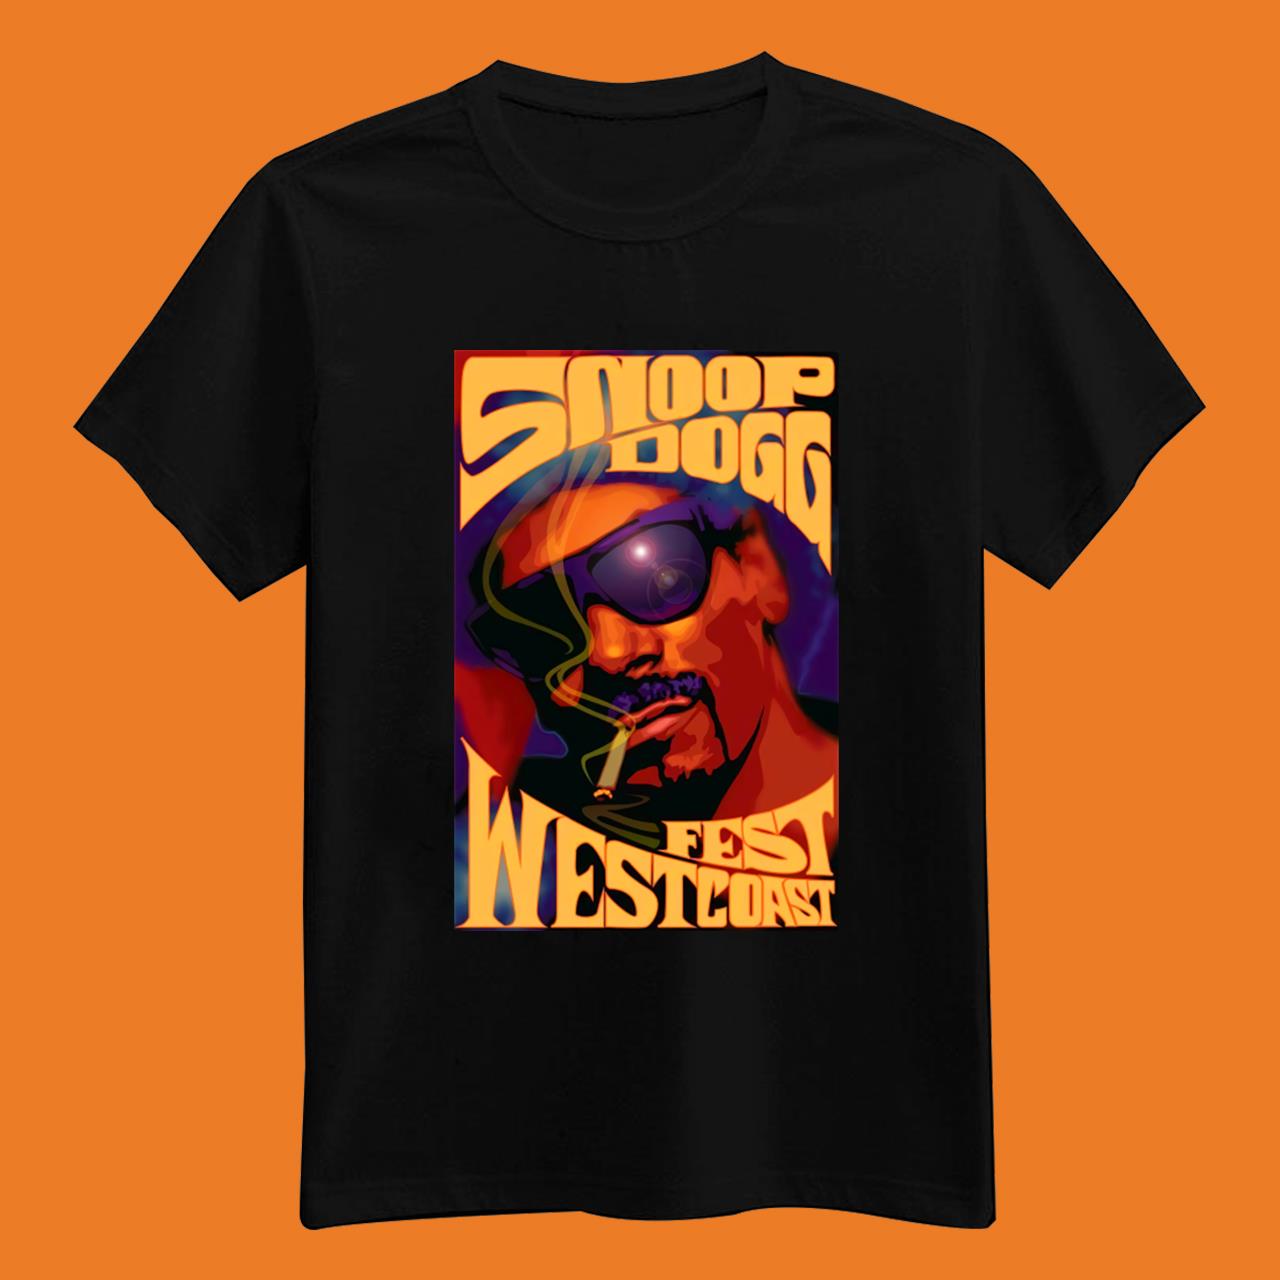 Snoop Dogg Fest Westcoast T-Shirt